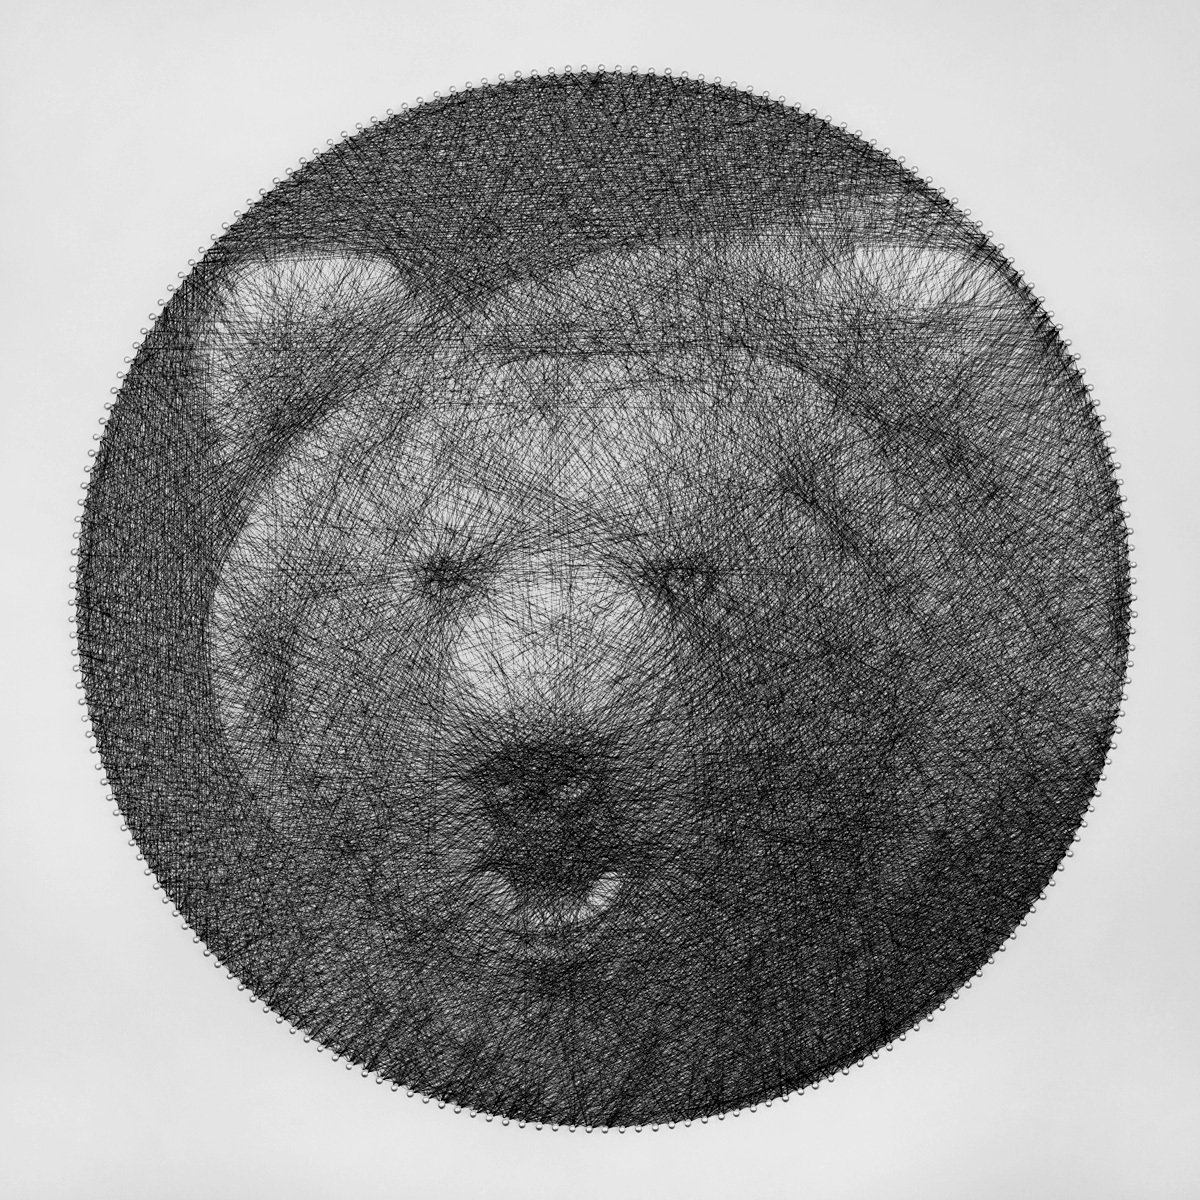 Bear Sring Art by Andrey Saharov